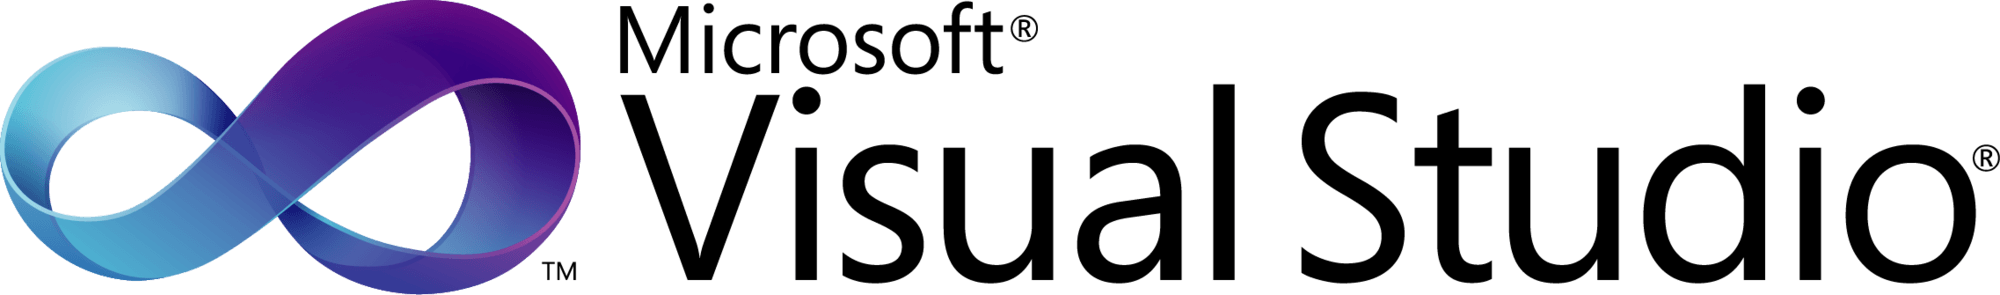 Visual Studio Logo - Microsoft Visual Studio